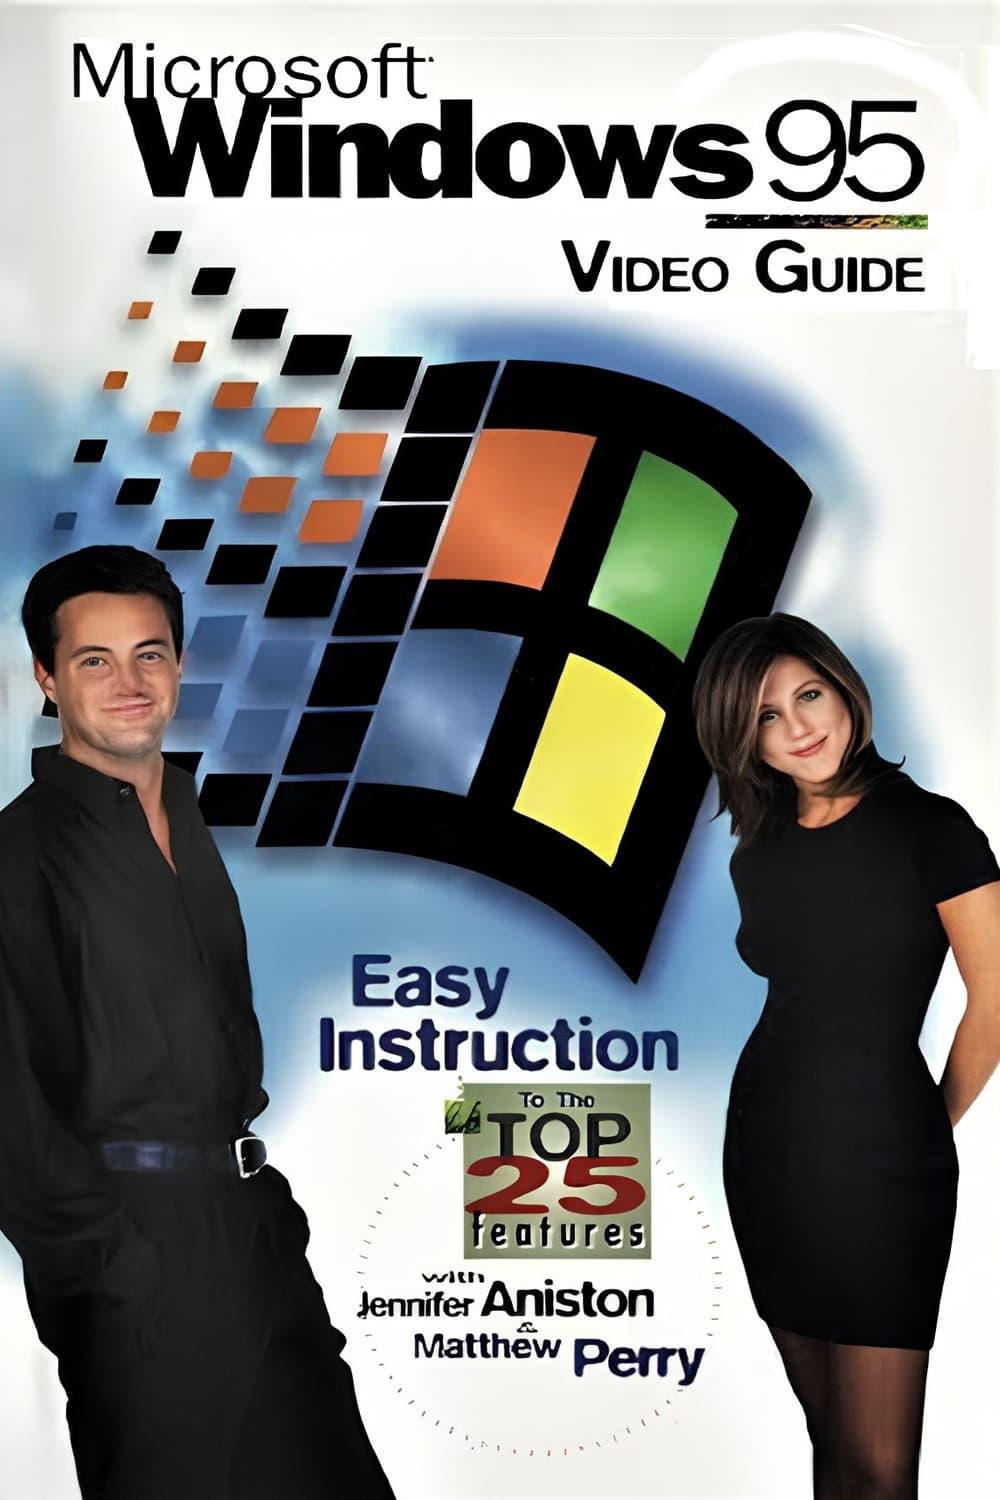 Microsoft Windows 95 Video Guide poster